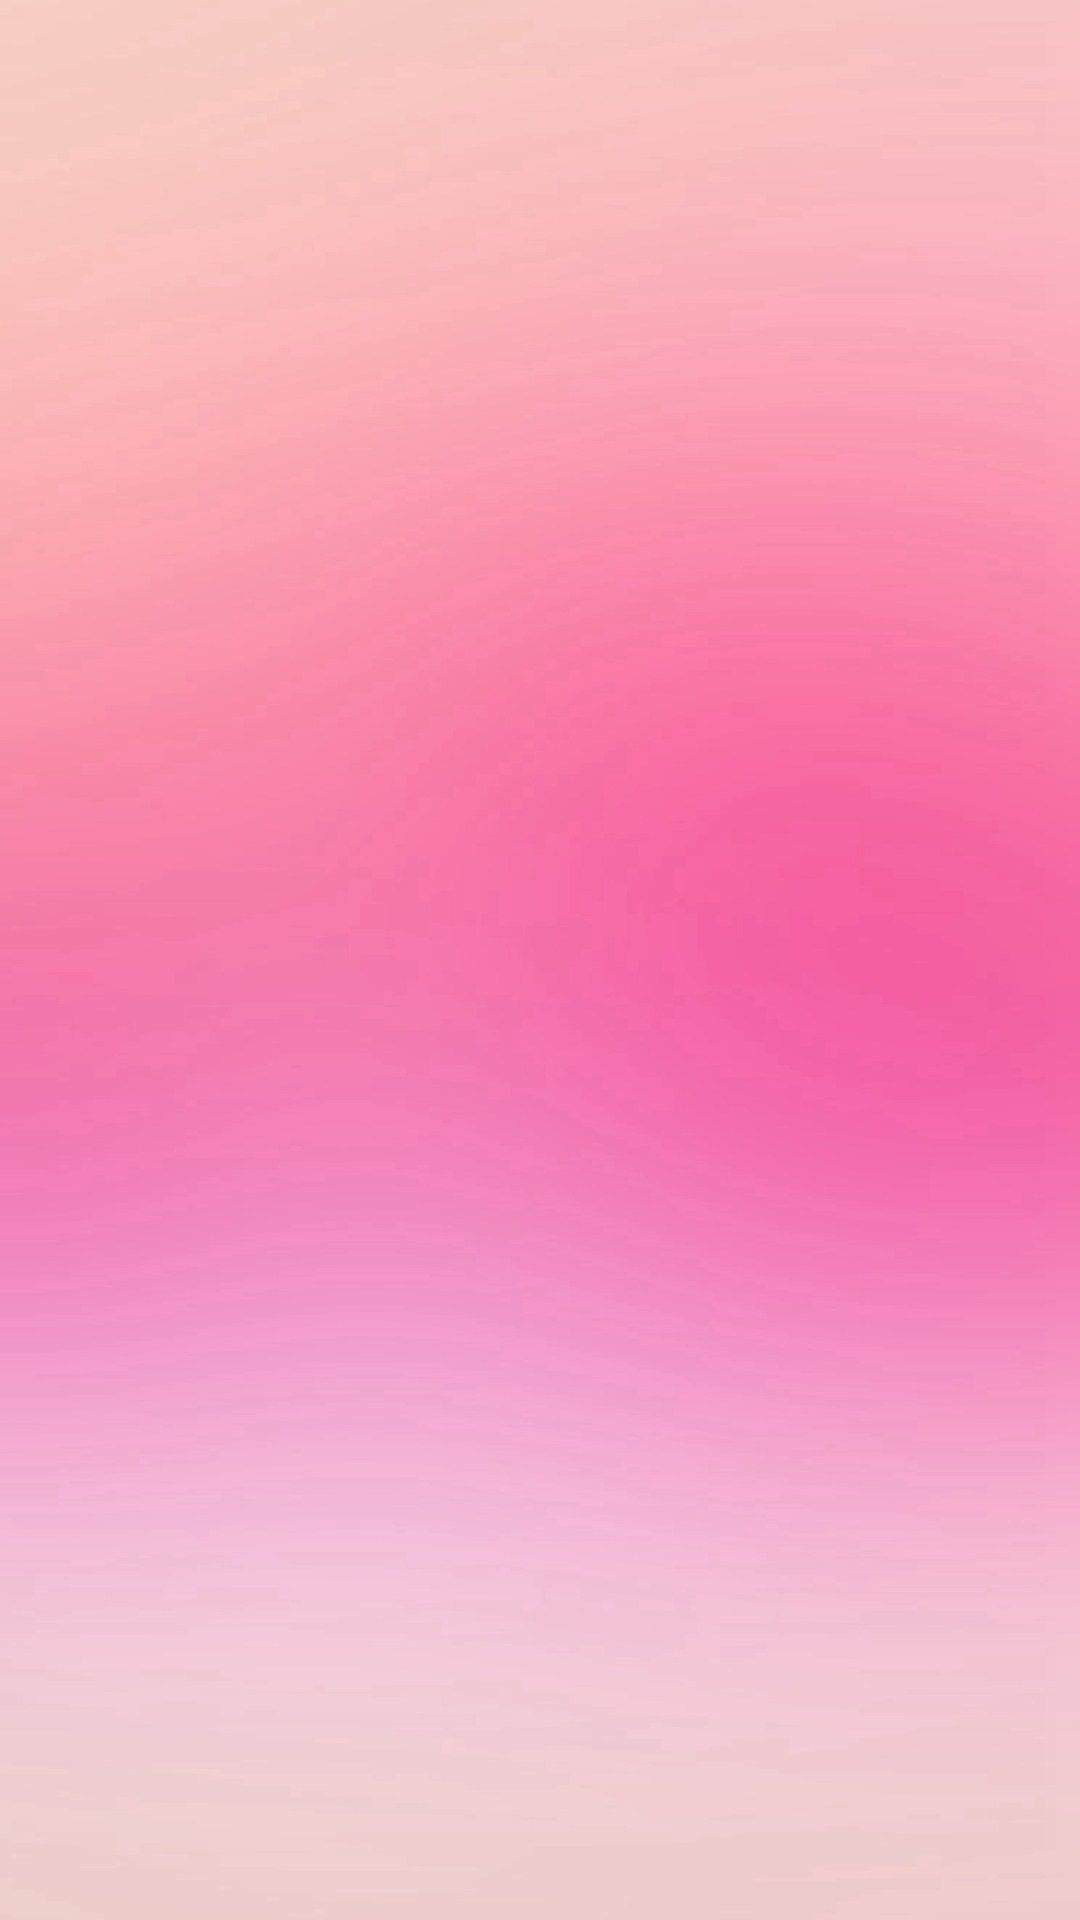 Fondos de pantalla rosa claro - FondosMil